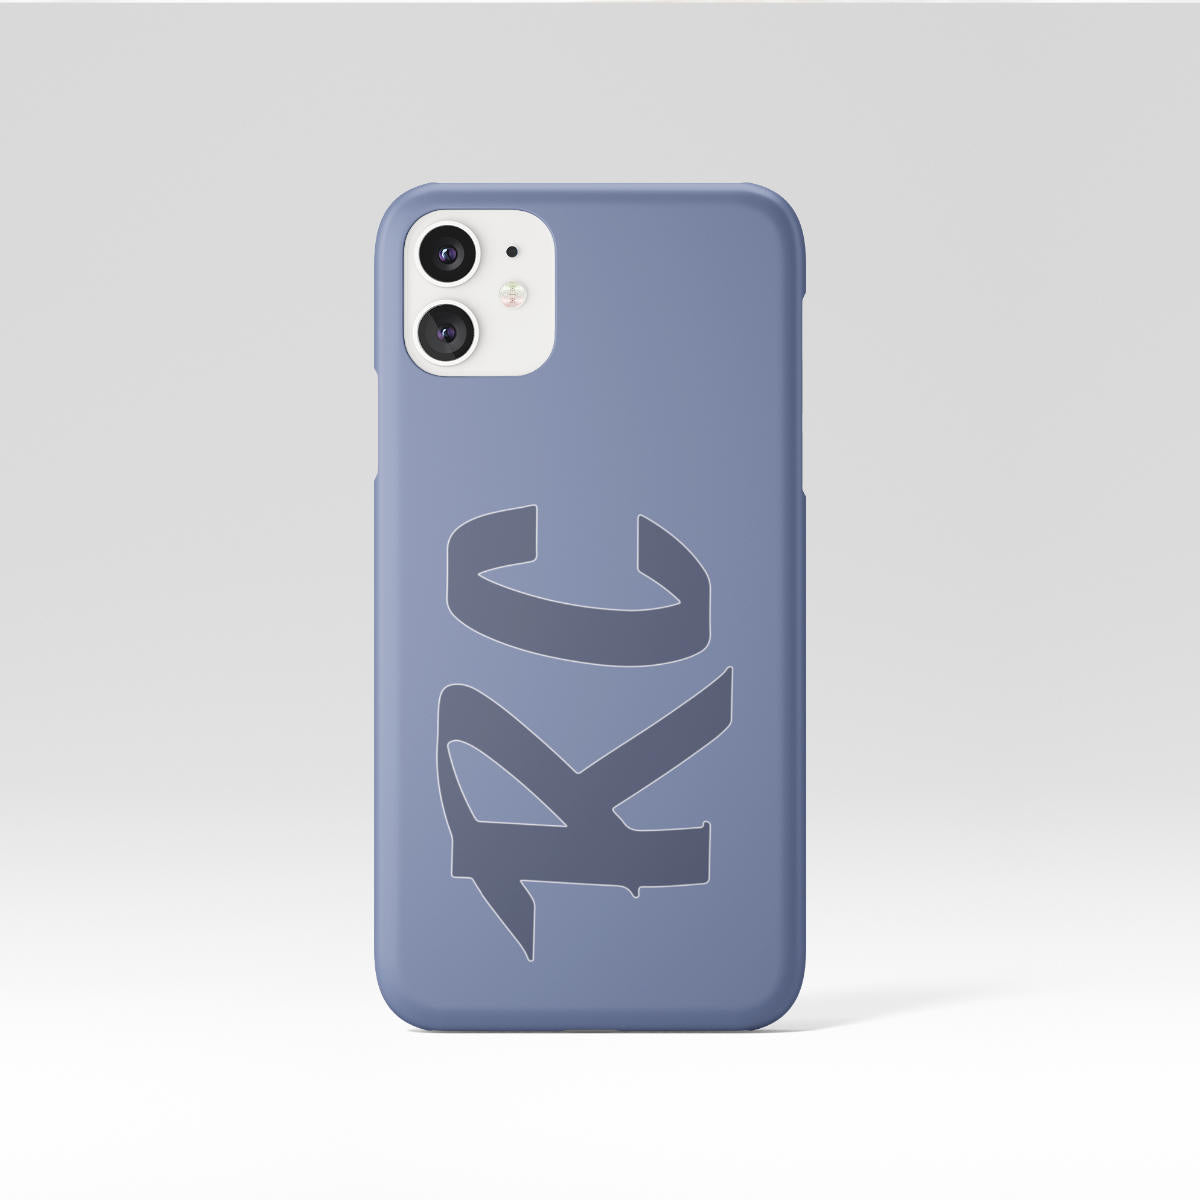 Pastel blue personalized phone case